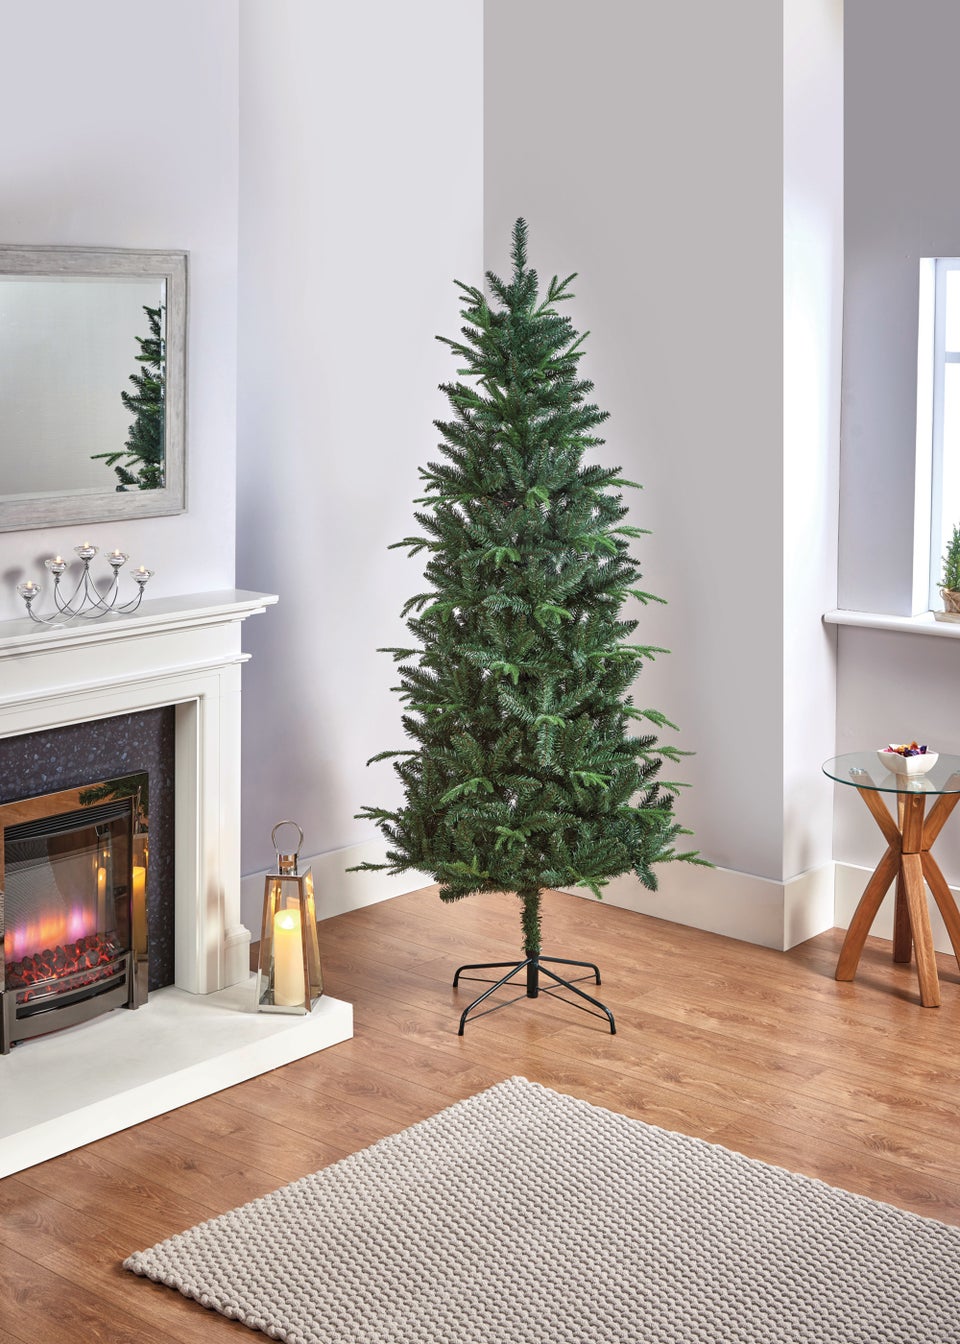 Premier Decorations Slim Aspen Fir Christmas Tree 5ft